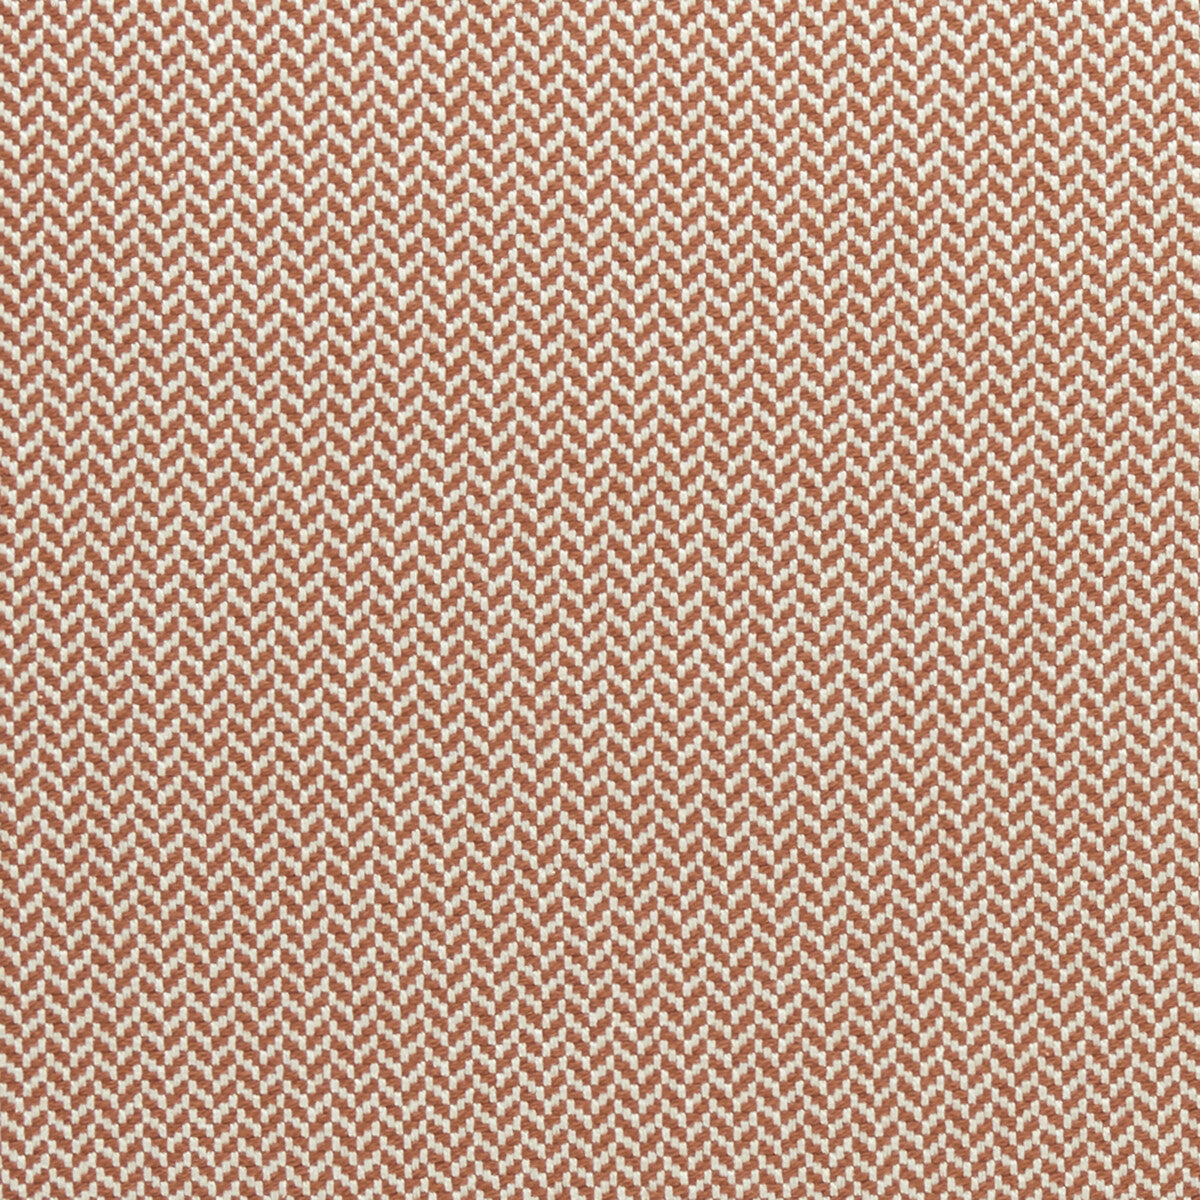 Zalika fabric in cinnabar color - pattern F0963/02.CAC.0 - by Clarke And Clarke in the Clarke &amp; Clarke Amara collection